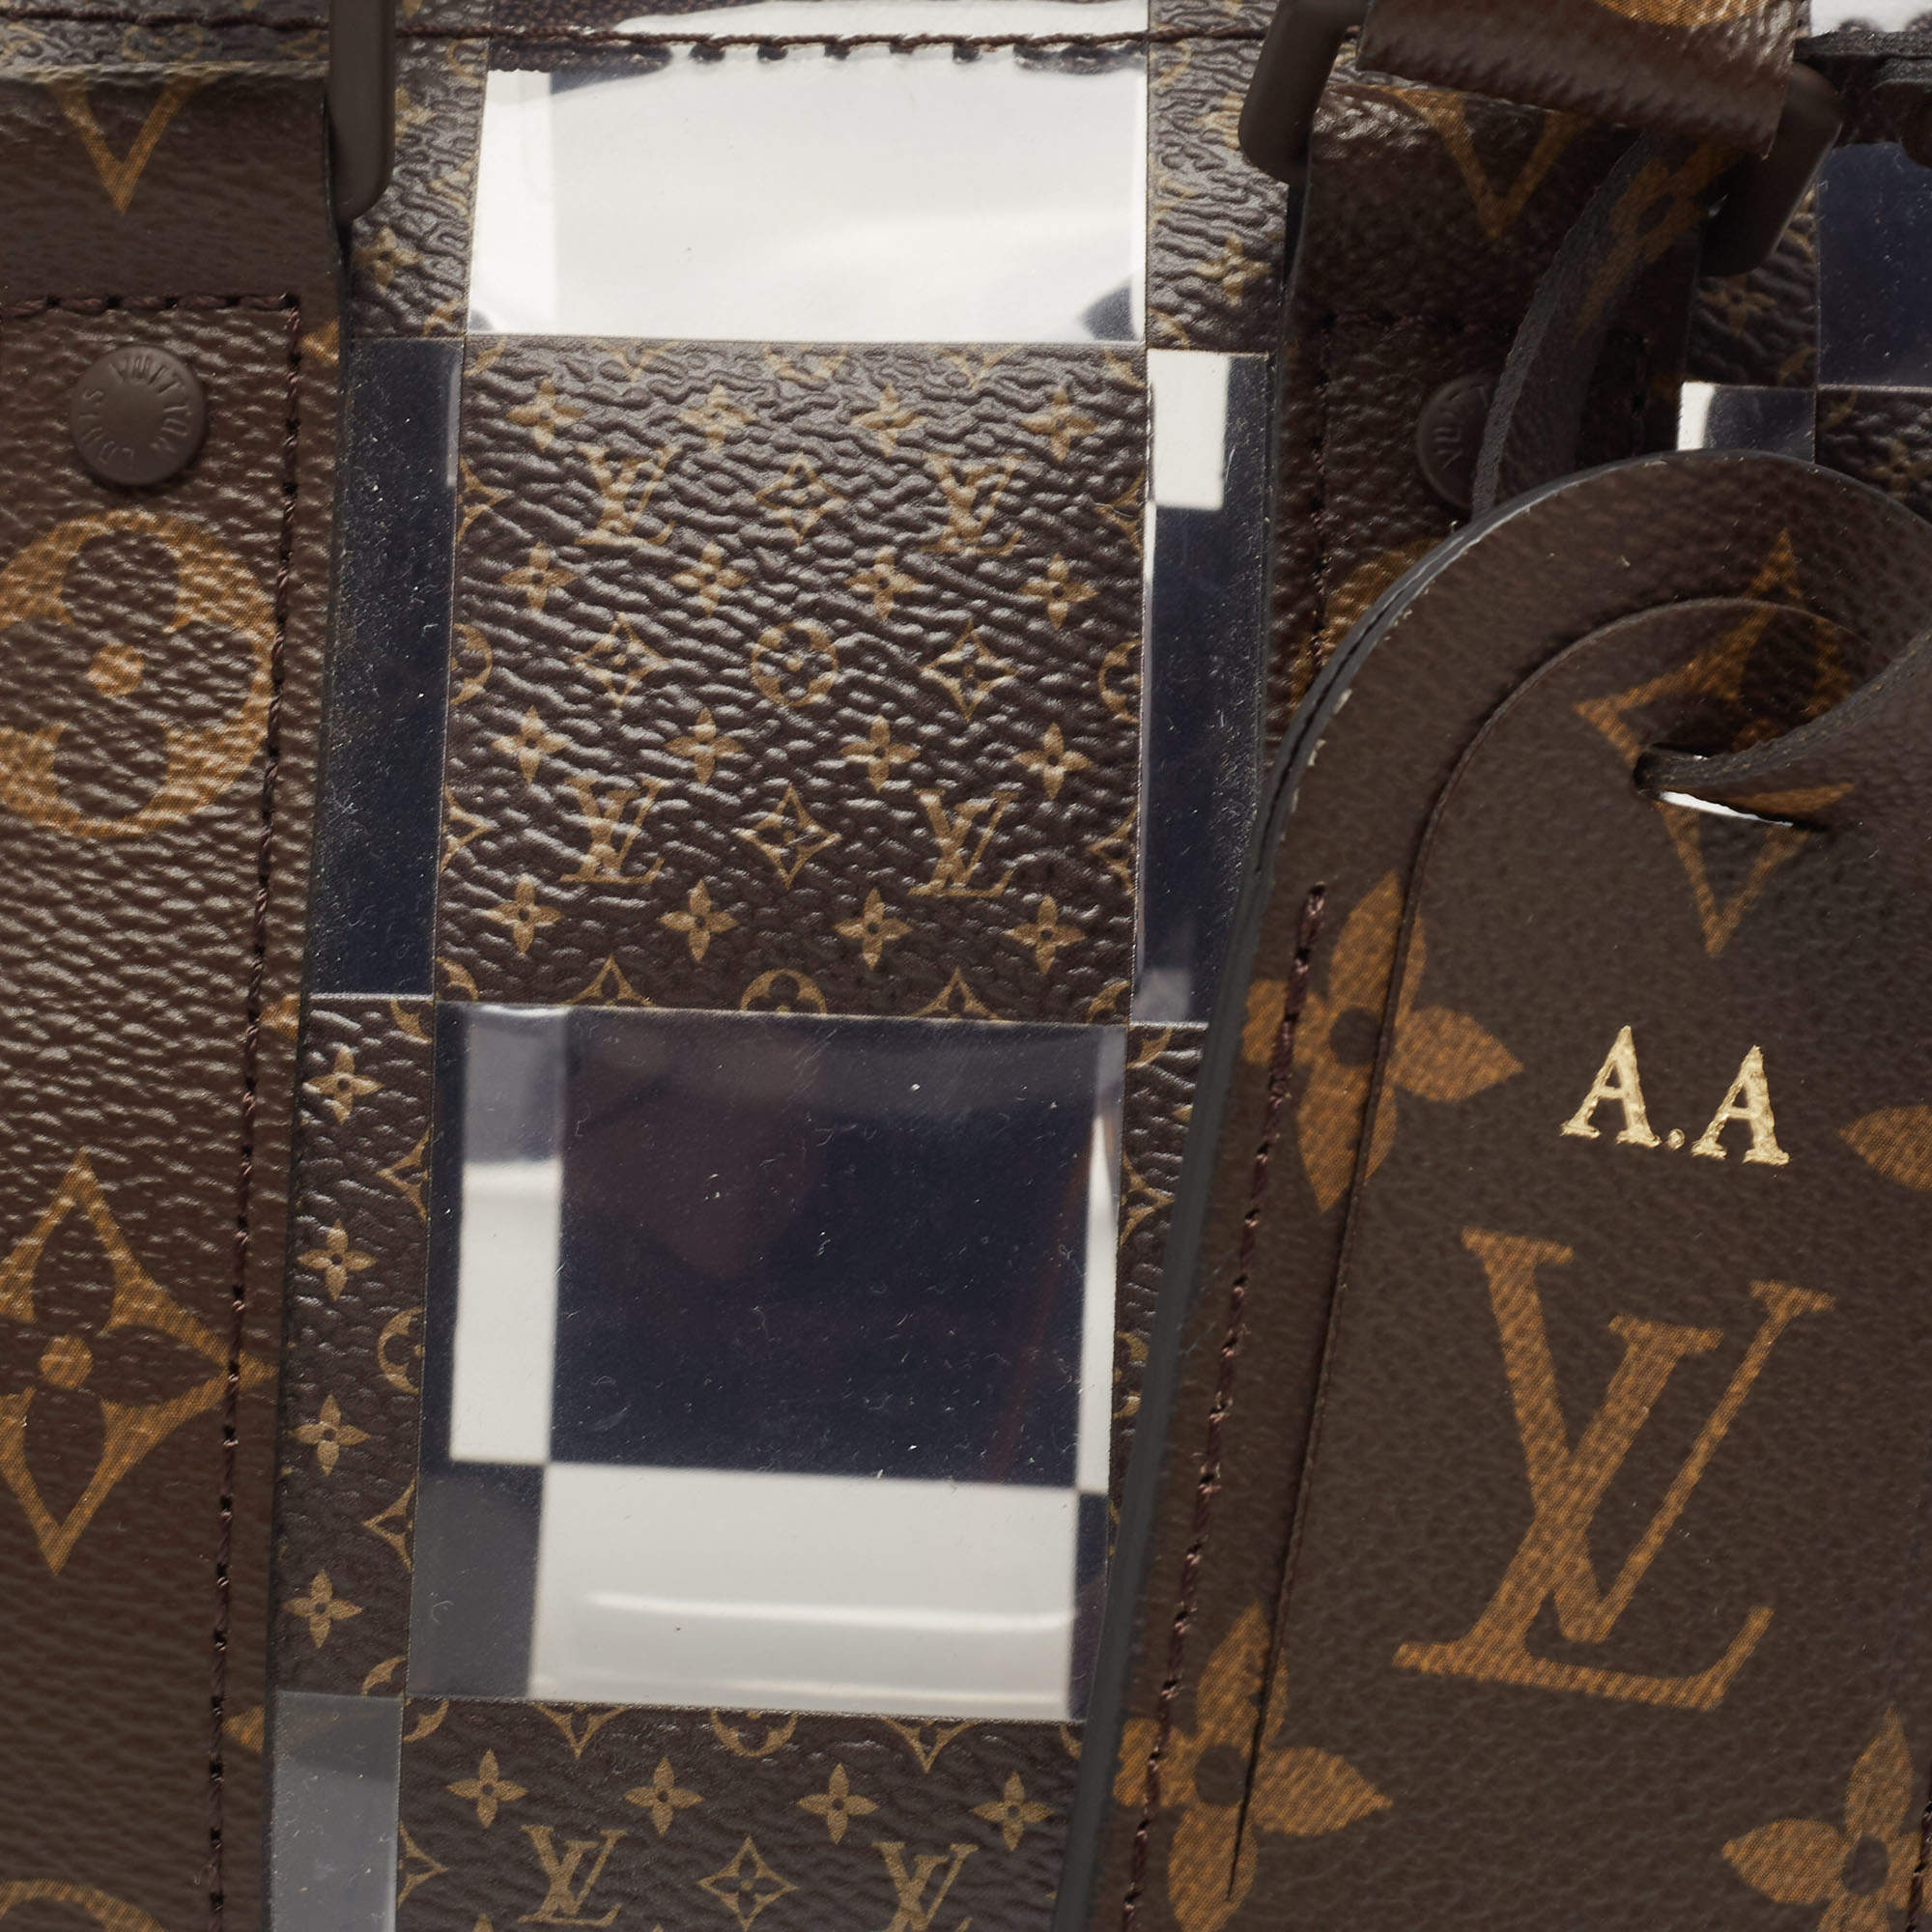 Louis Vuitton Monogram Chess Canvas and PVC Keepall Bandoulière 25 Bag